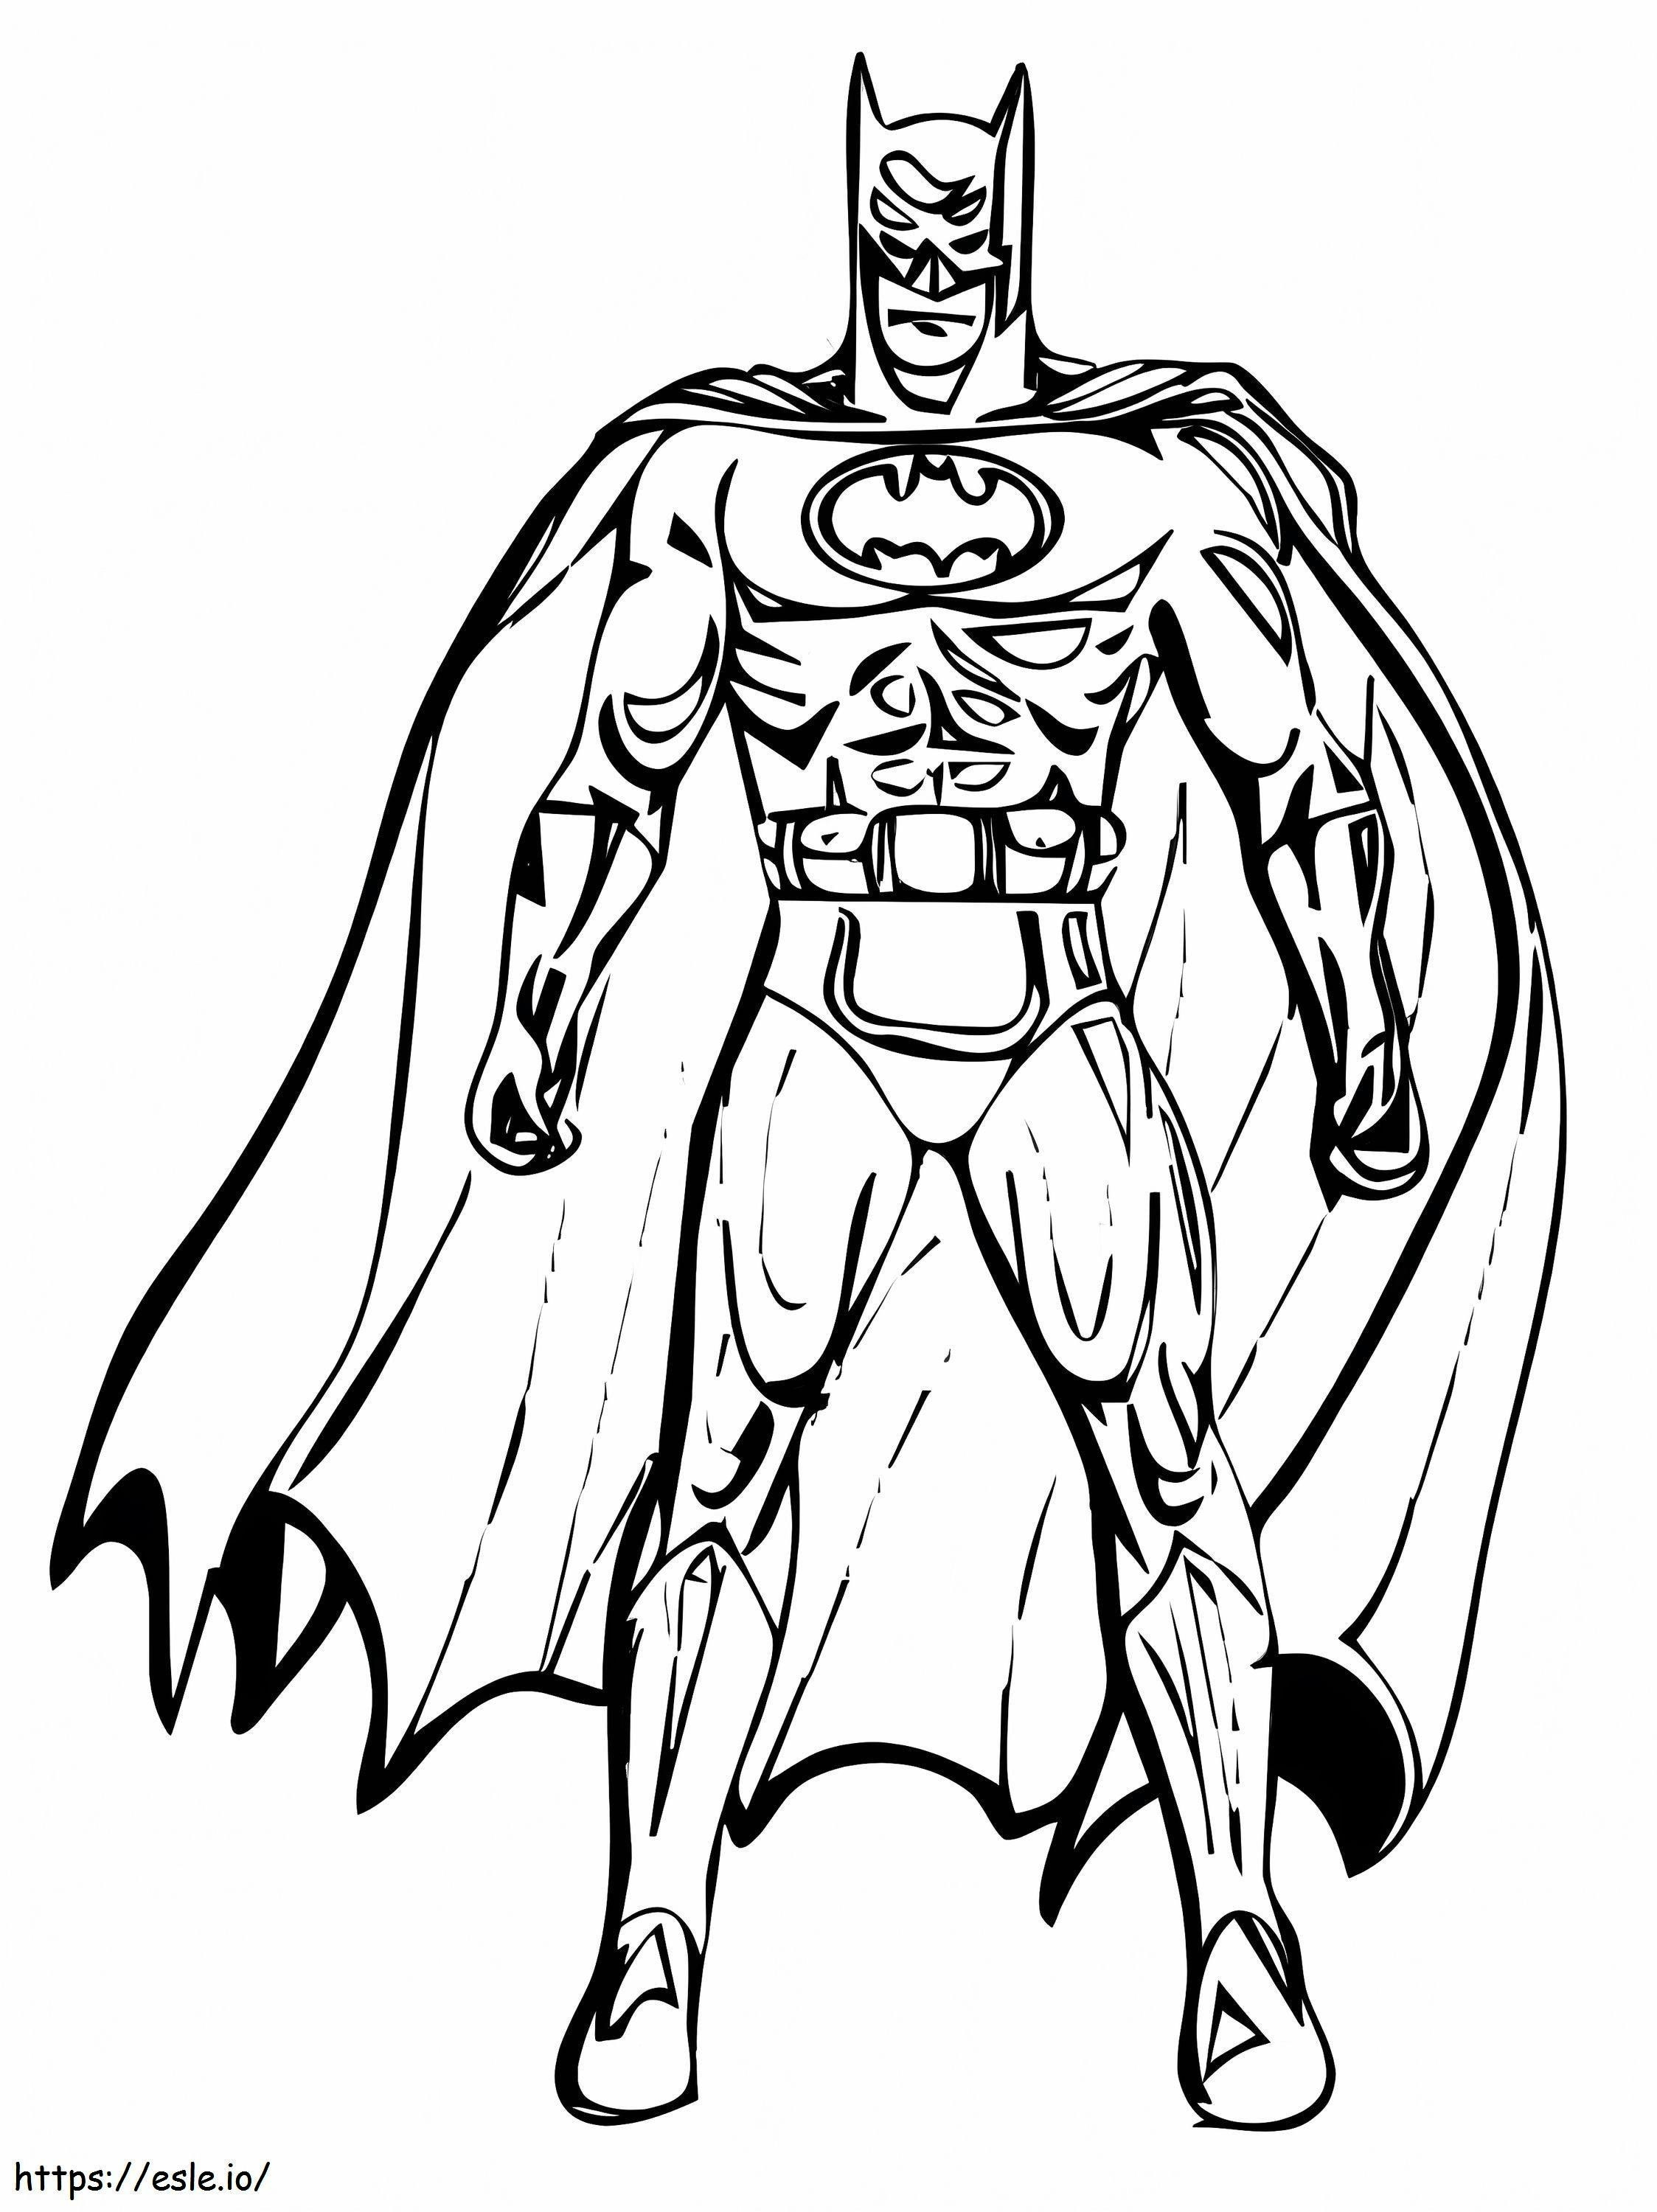 Rysunek Batmana kolorowanka